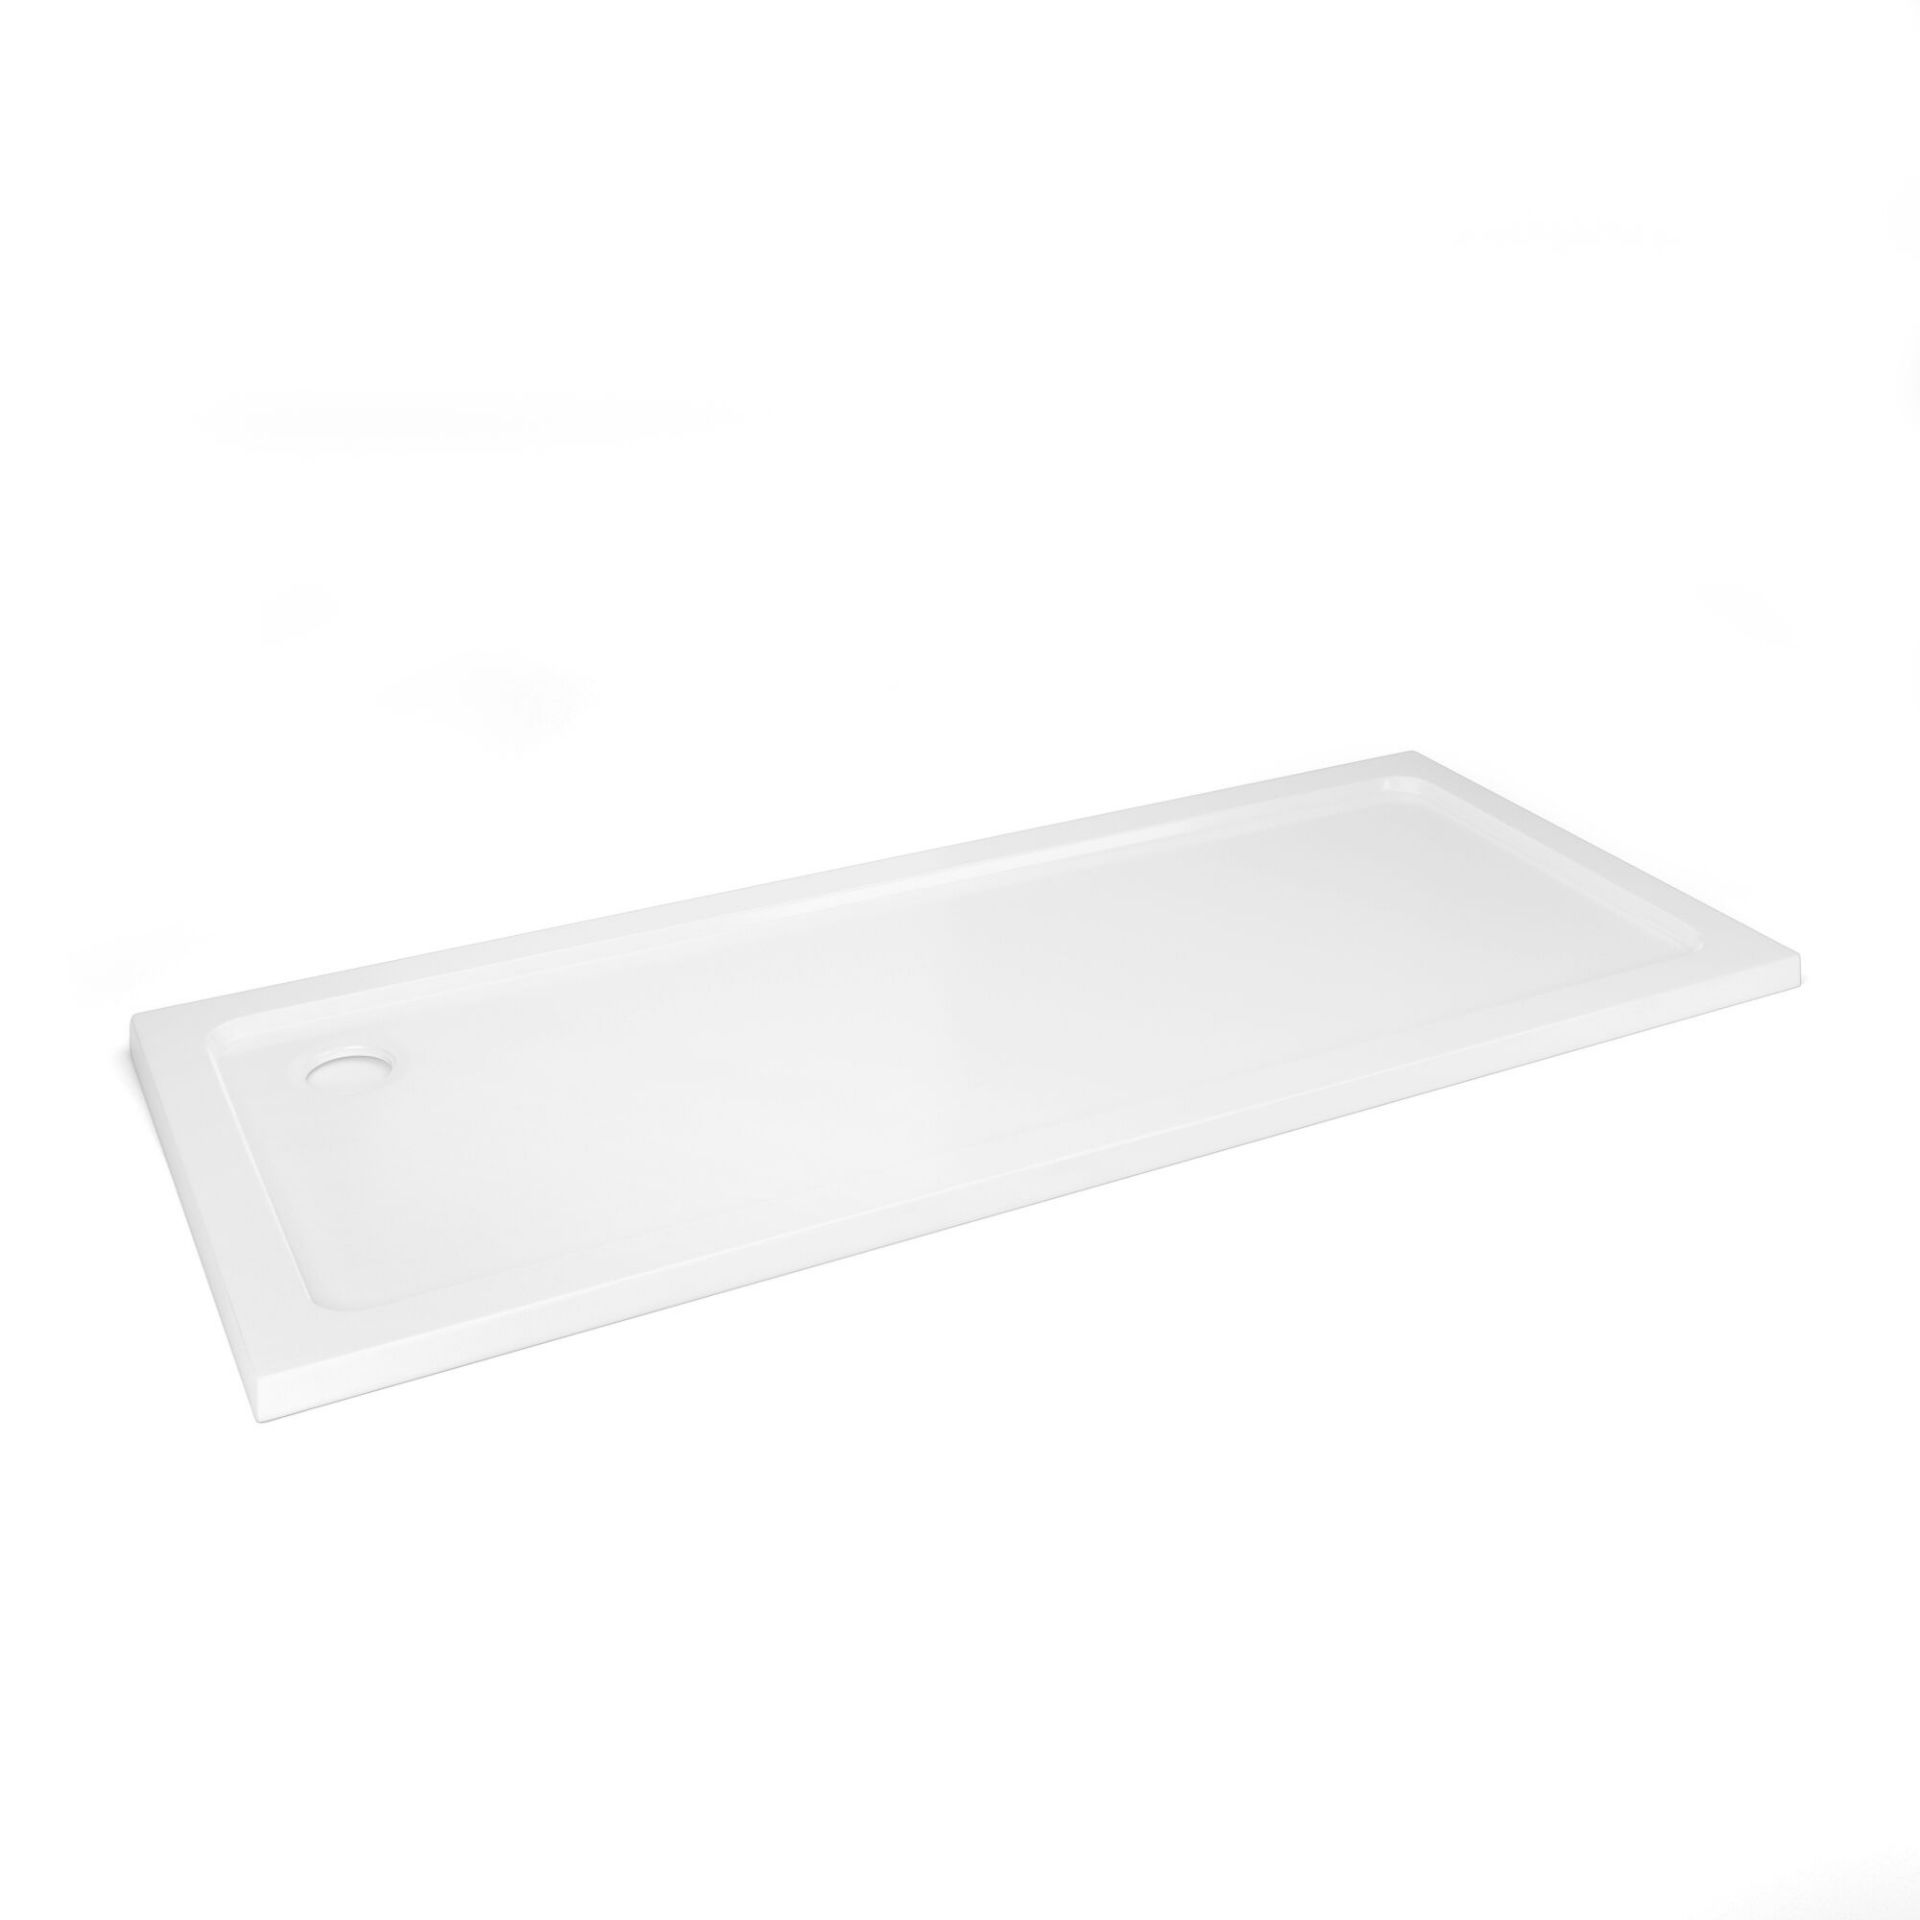 (KL150) 1700x700mm Rectangular Ultra Slim Stone Shower Tray. Low profile ultra slim design Gel - Image 2 of 2